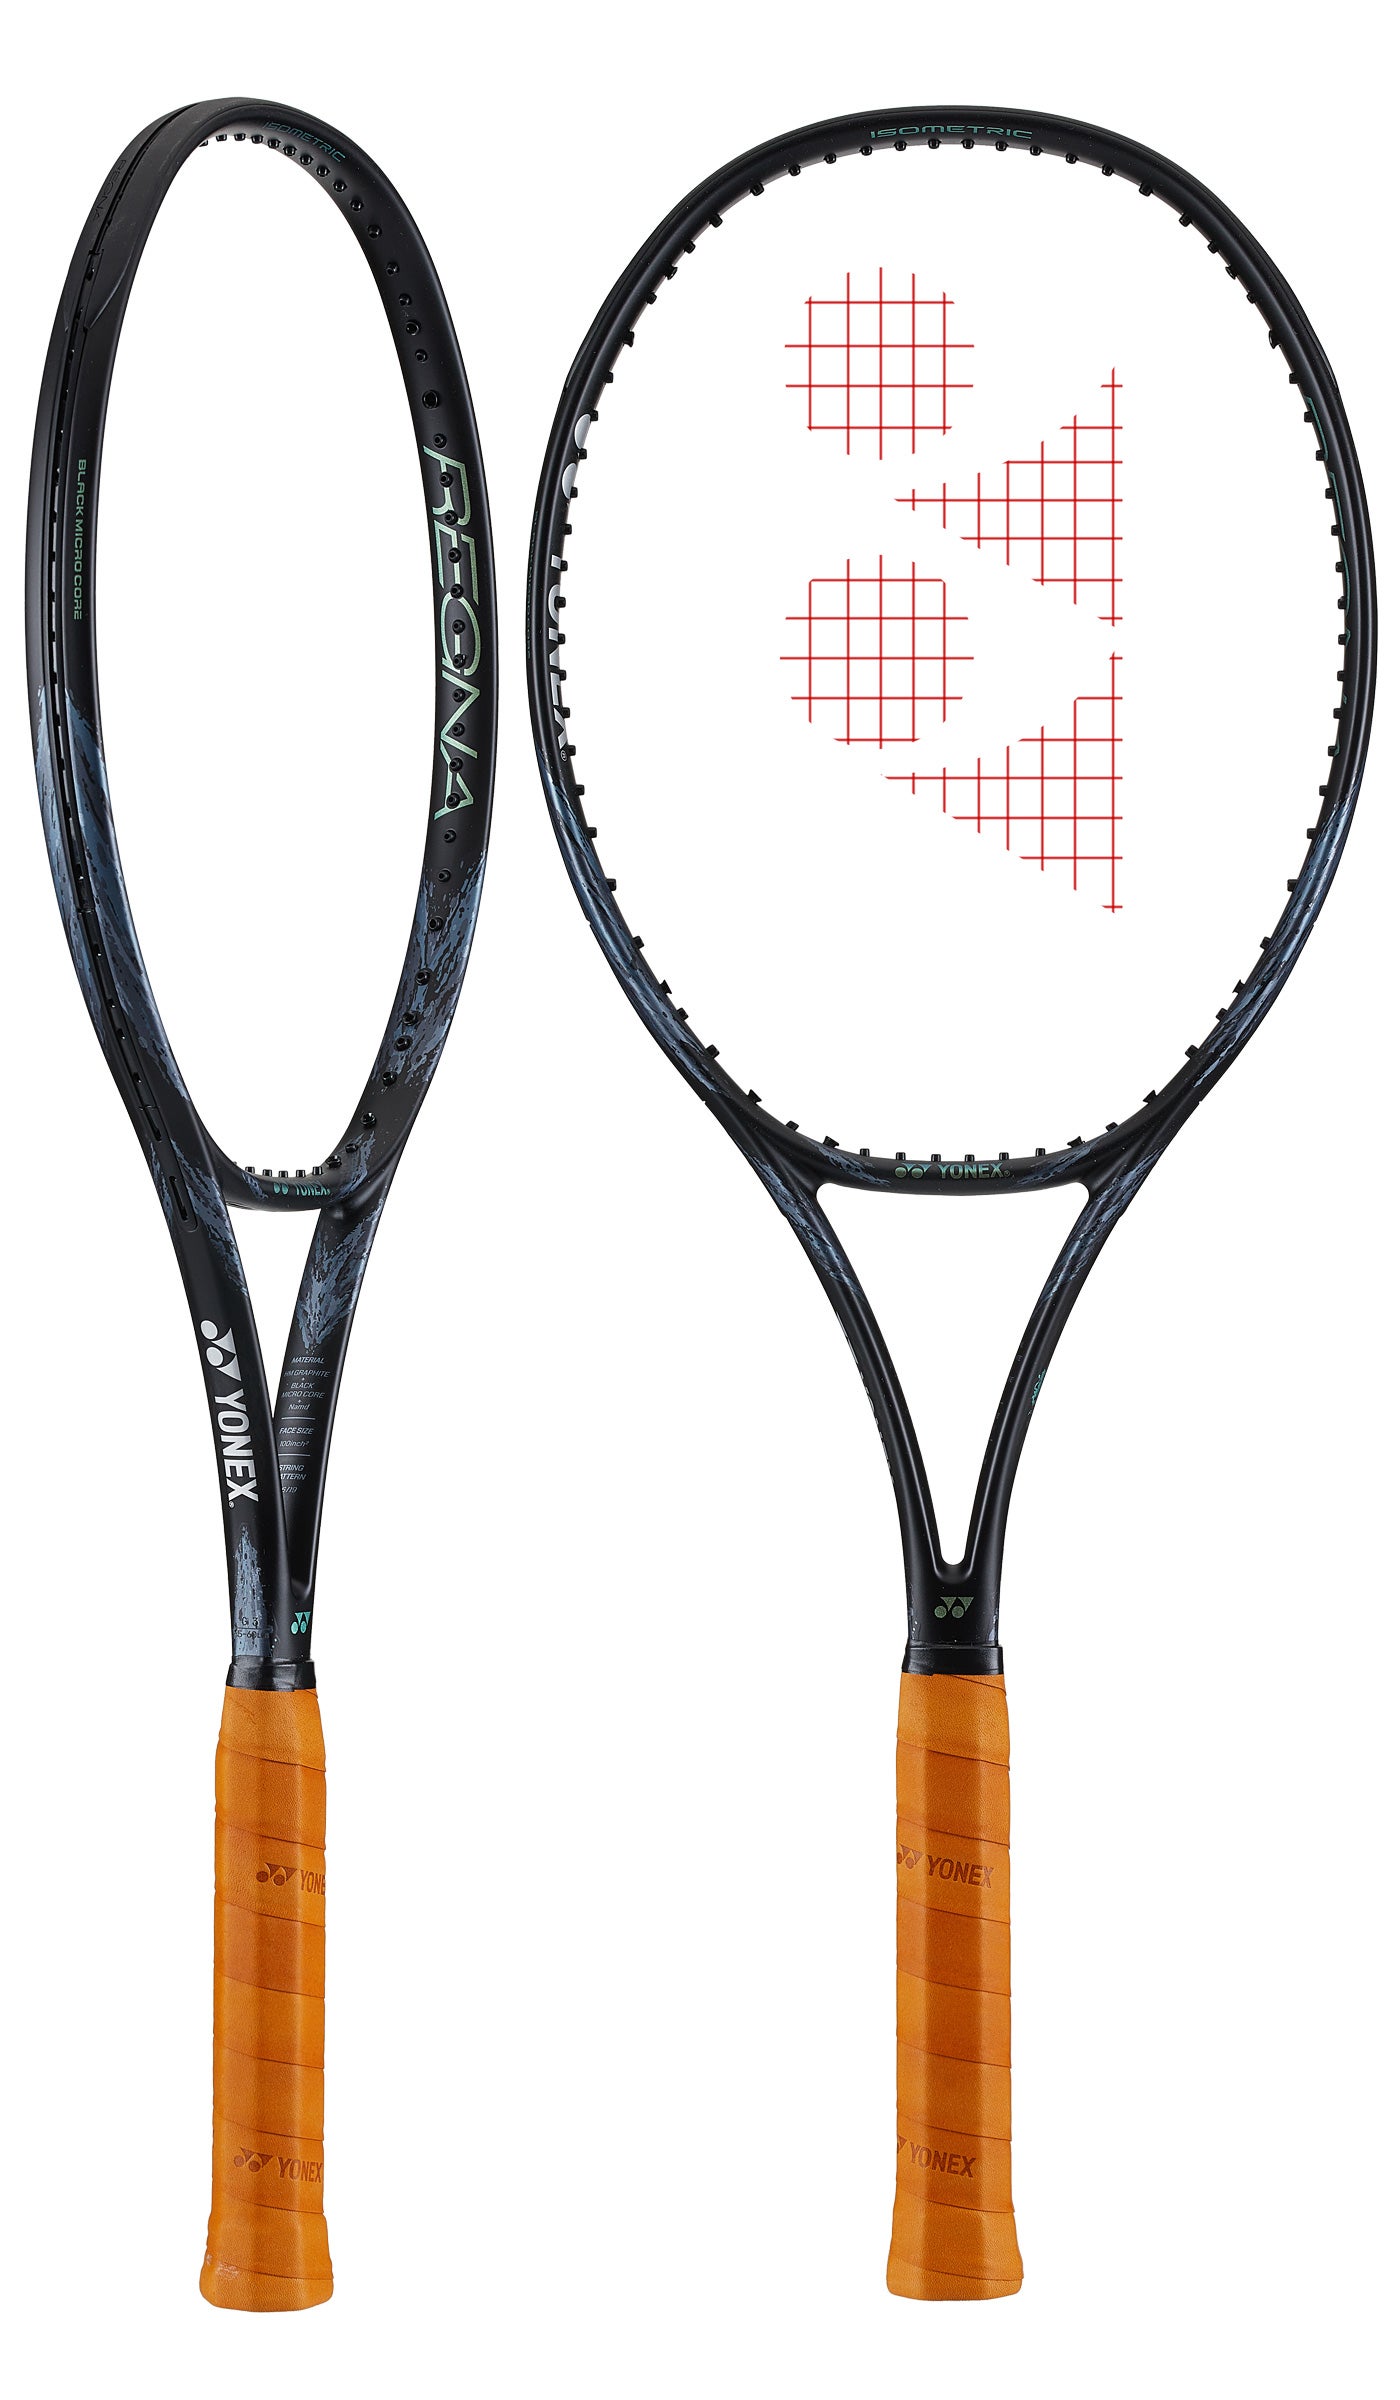 Auth Dealer tennis string racket racquet HEAD LYNX 17g SET Anthracite 